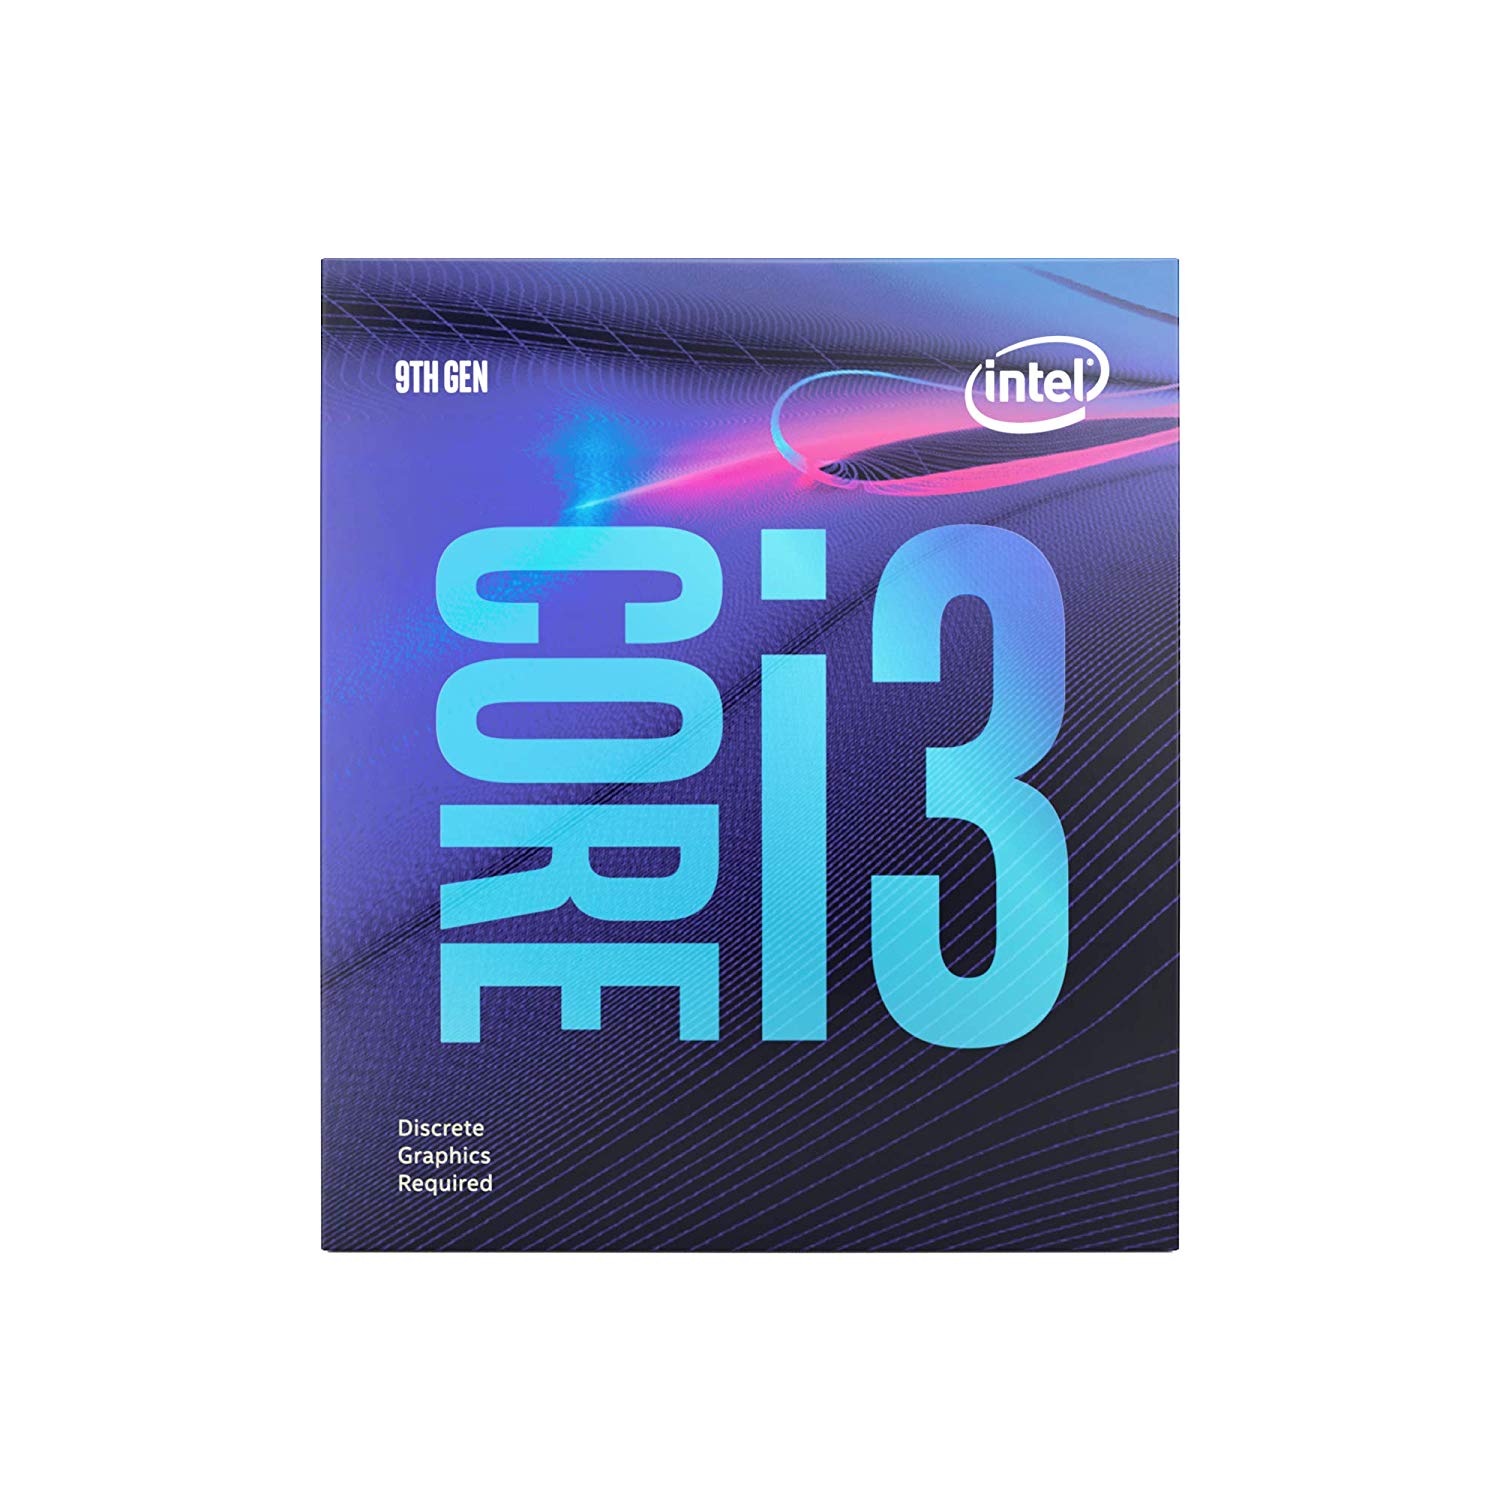 Intel Core i3-9100F 9th Gen Desktop Processor 4 Core Up to 4.2 GHz LGA1151 300 Series 65W